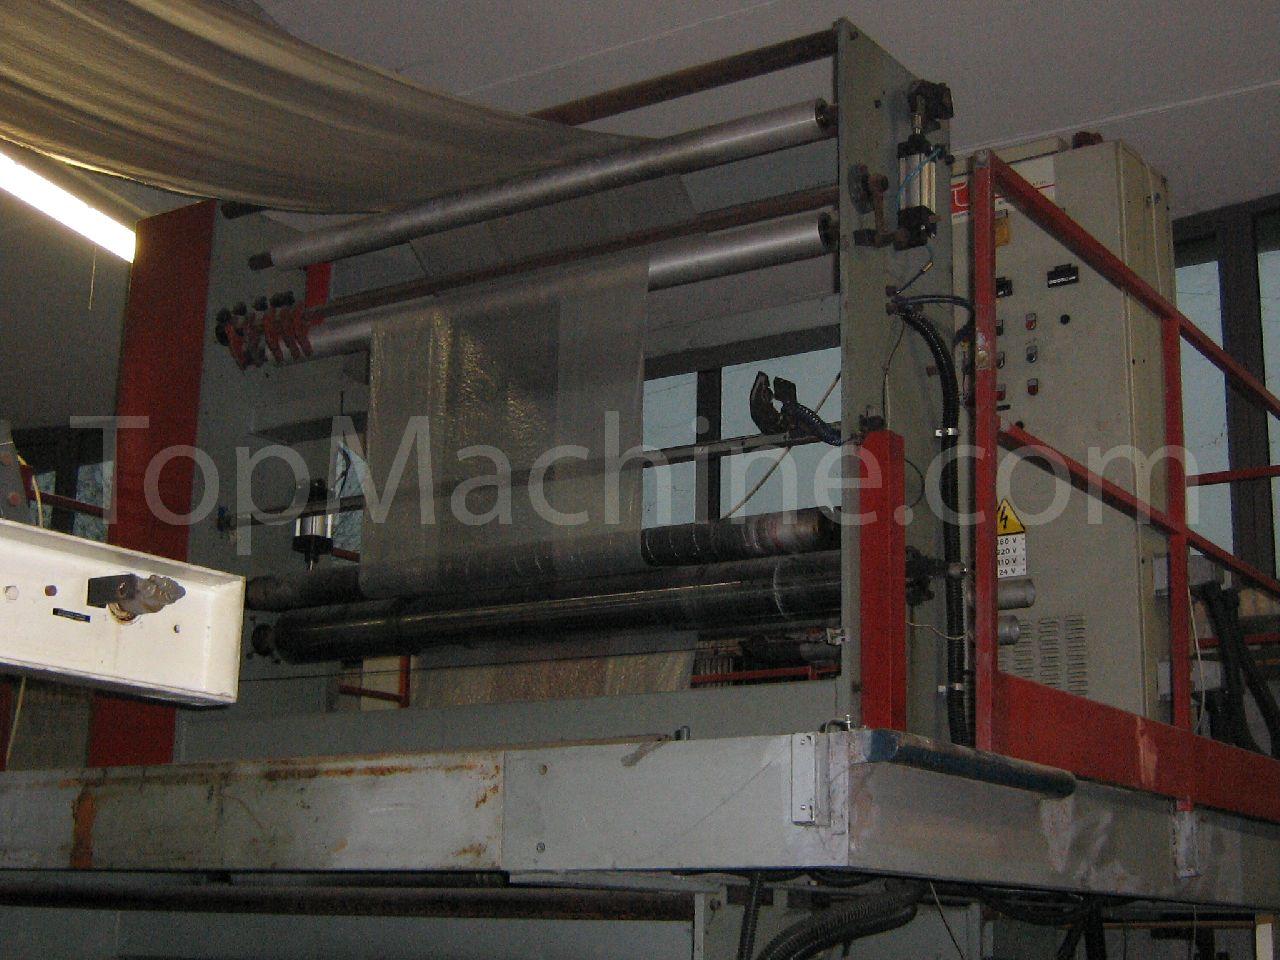 Used AG-MAC 55-70-55 Film & Print Coex extr. filmes tubulares